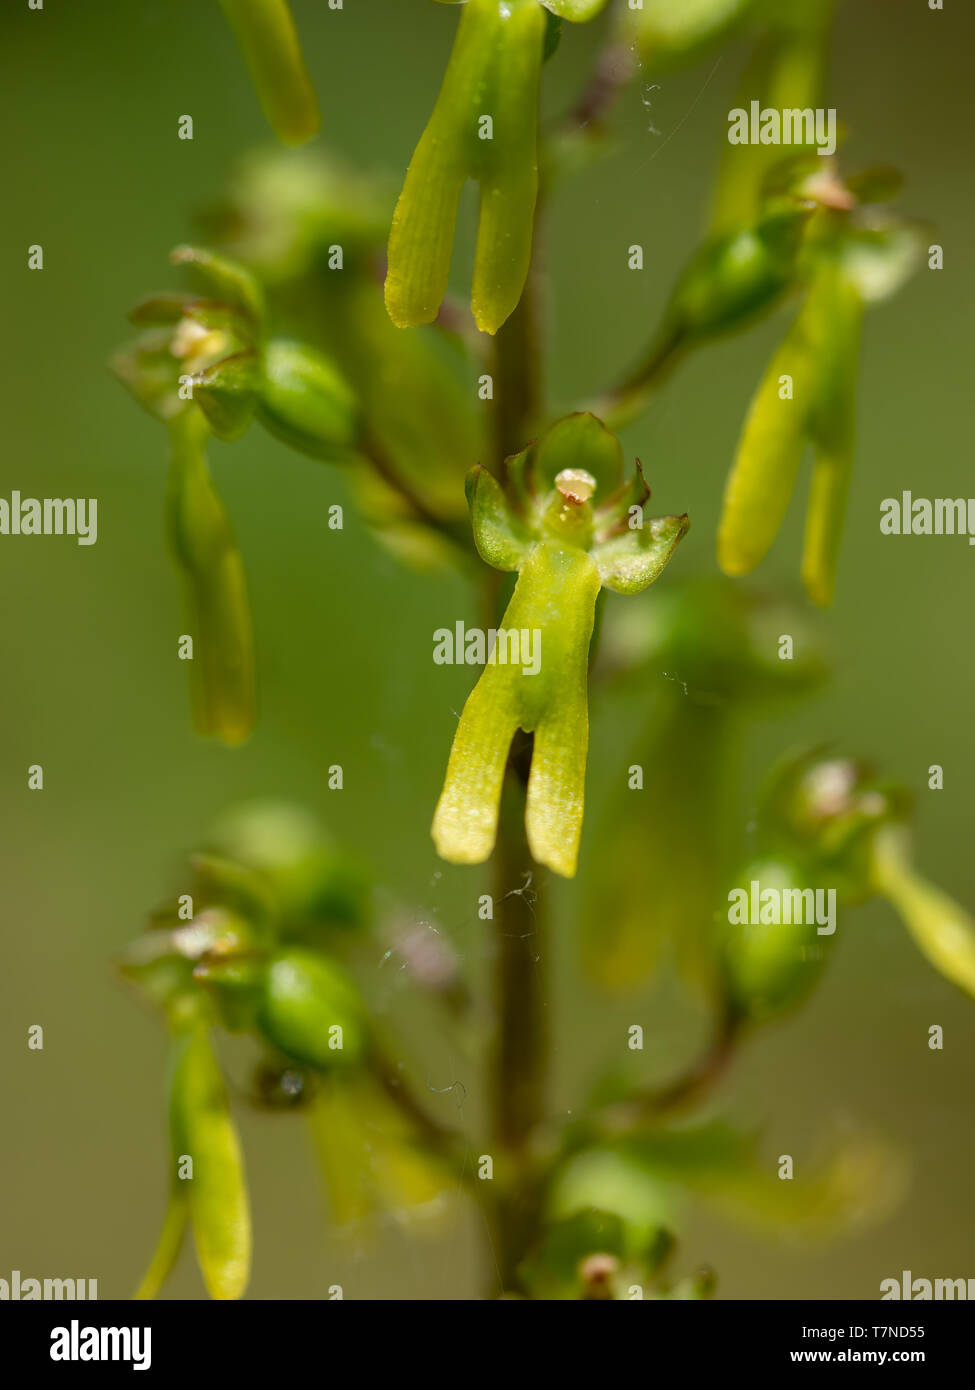 Common aka Eggleaf twayblade, Neottia ovata. Wild orchid. Closeup detail of flower. Stock Photo